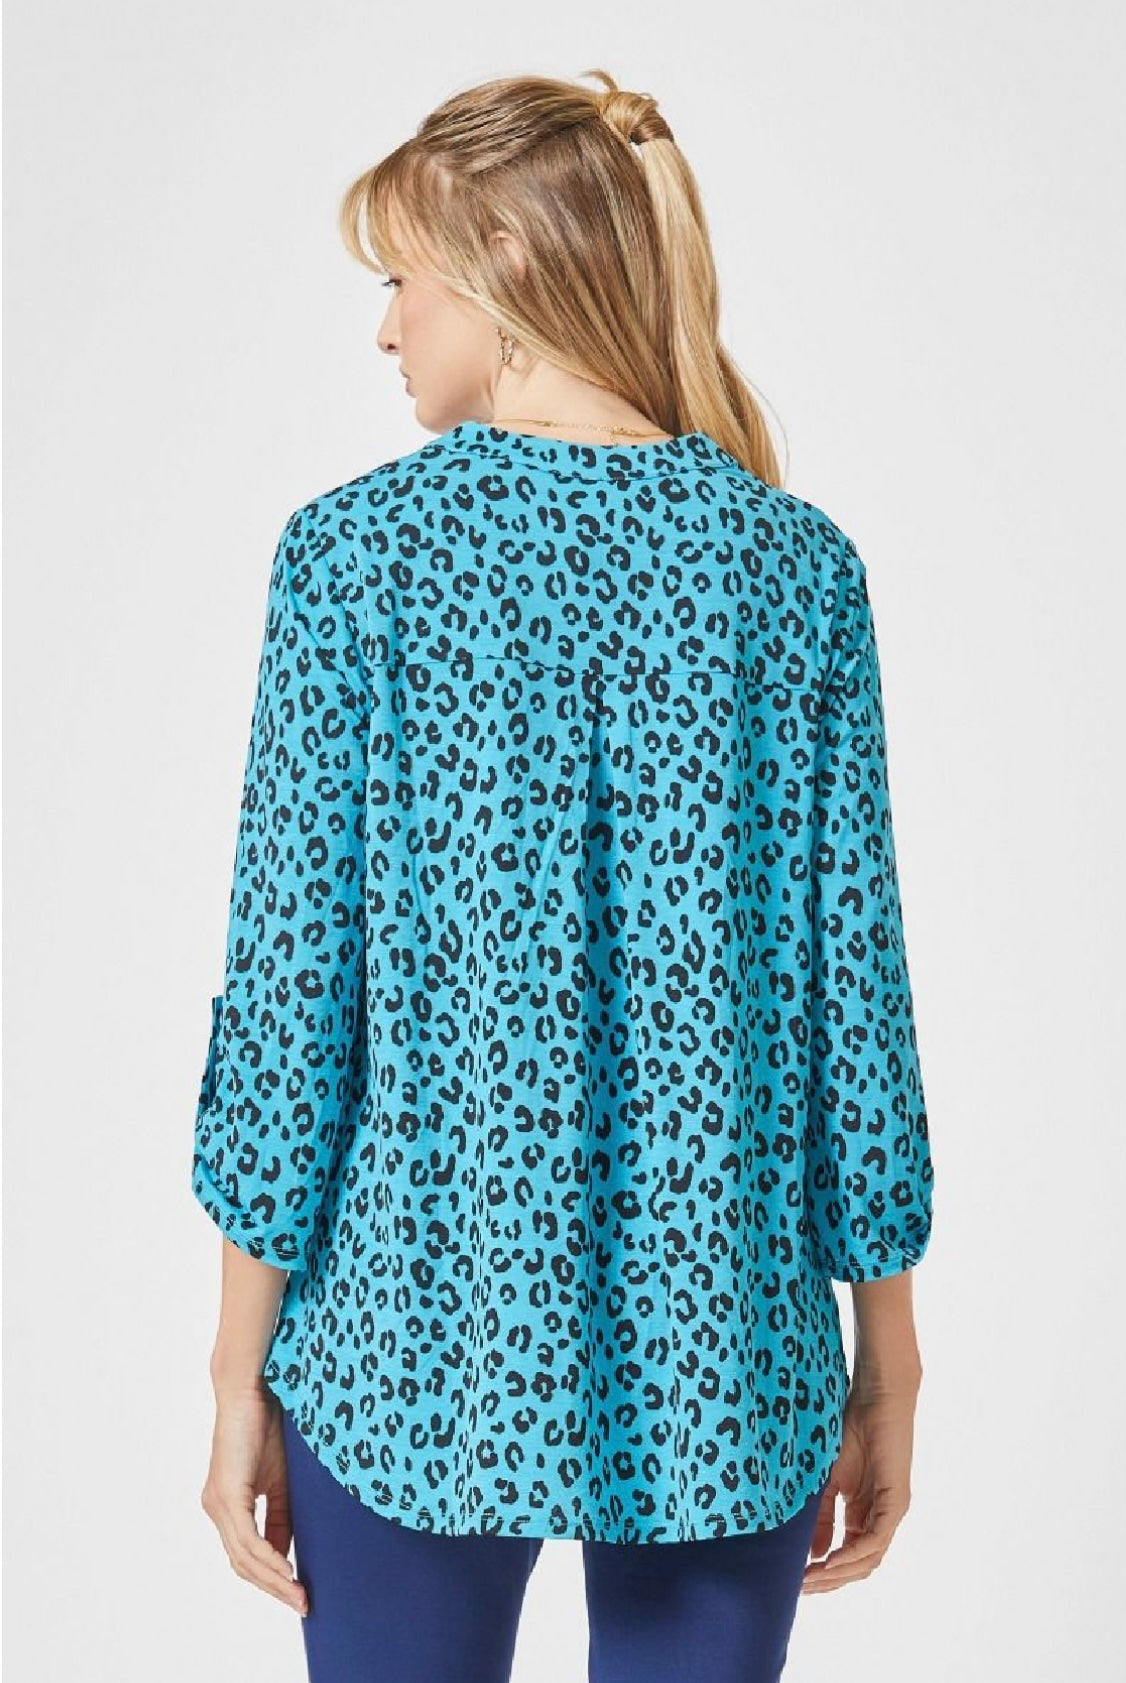 Blue Leopard Lizzy Top